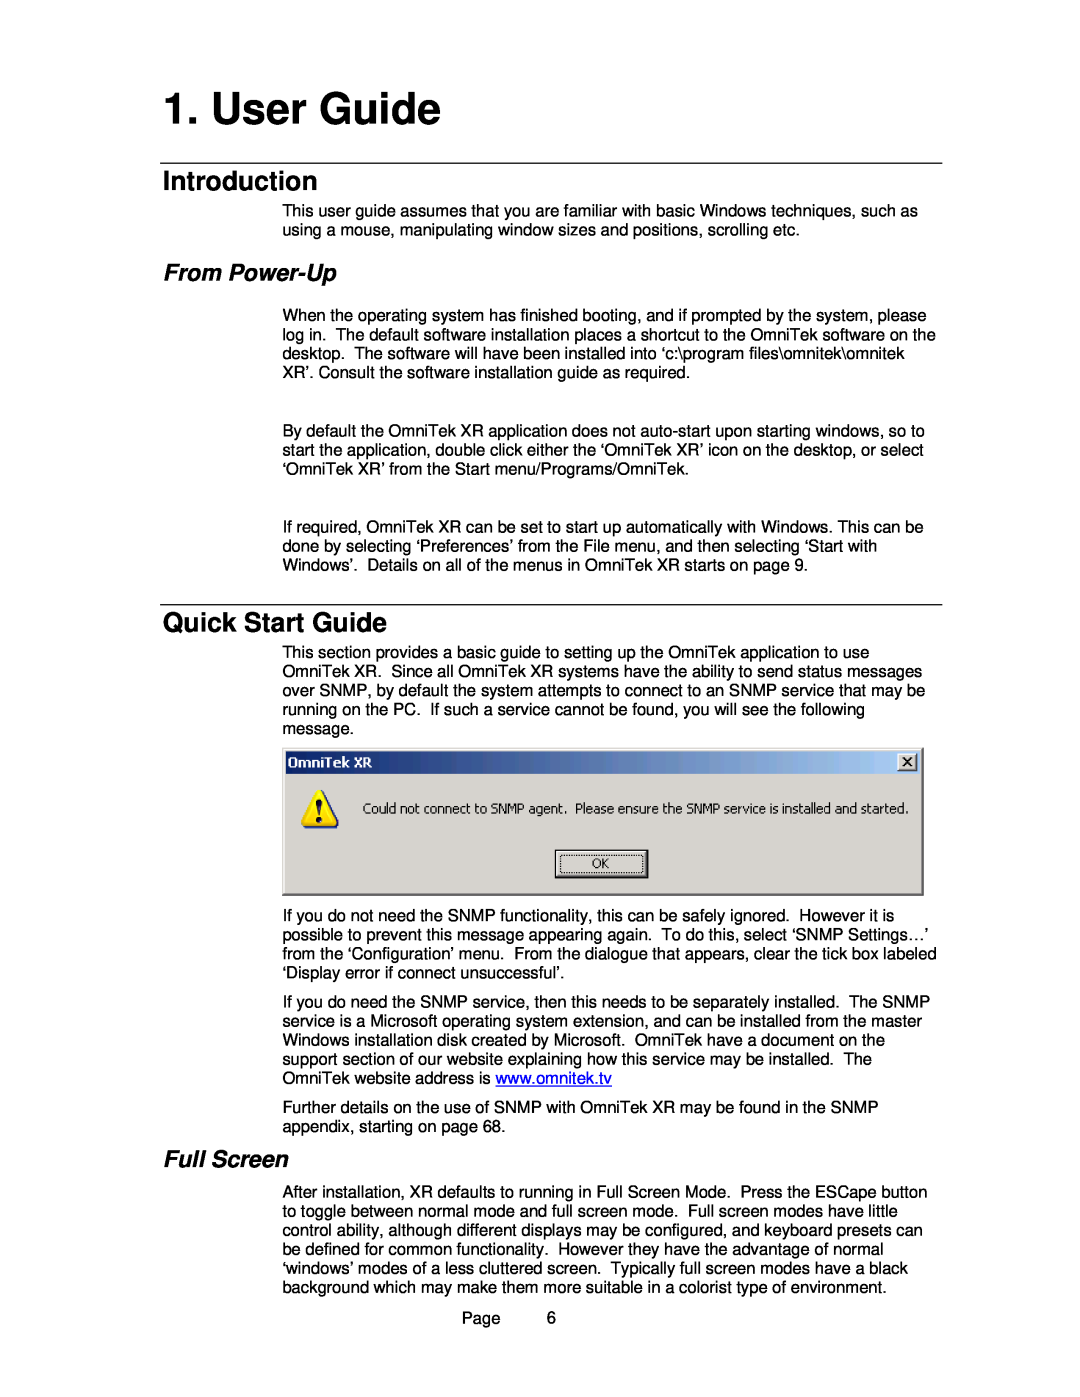 OmniTek OmniTek XR manual User Guide, Introduction, Quick Start Guide, From Power-Up, Full Screen 